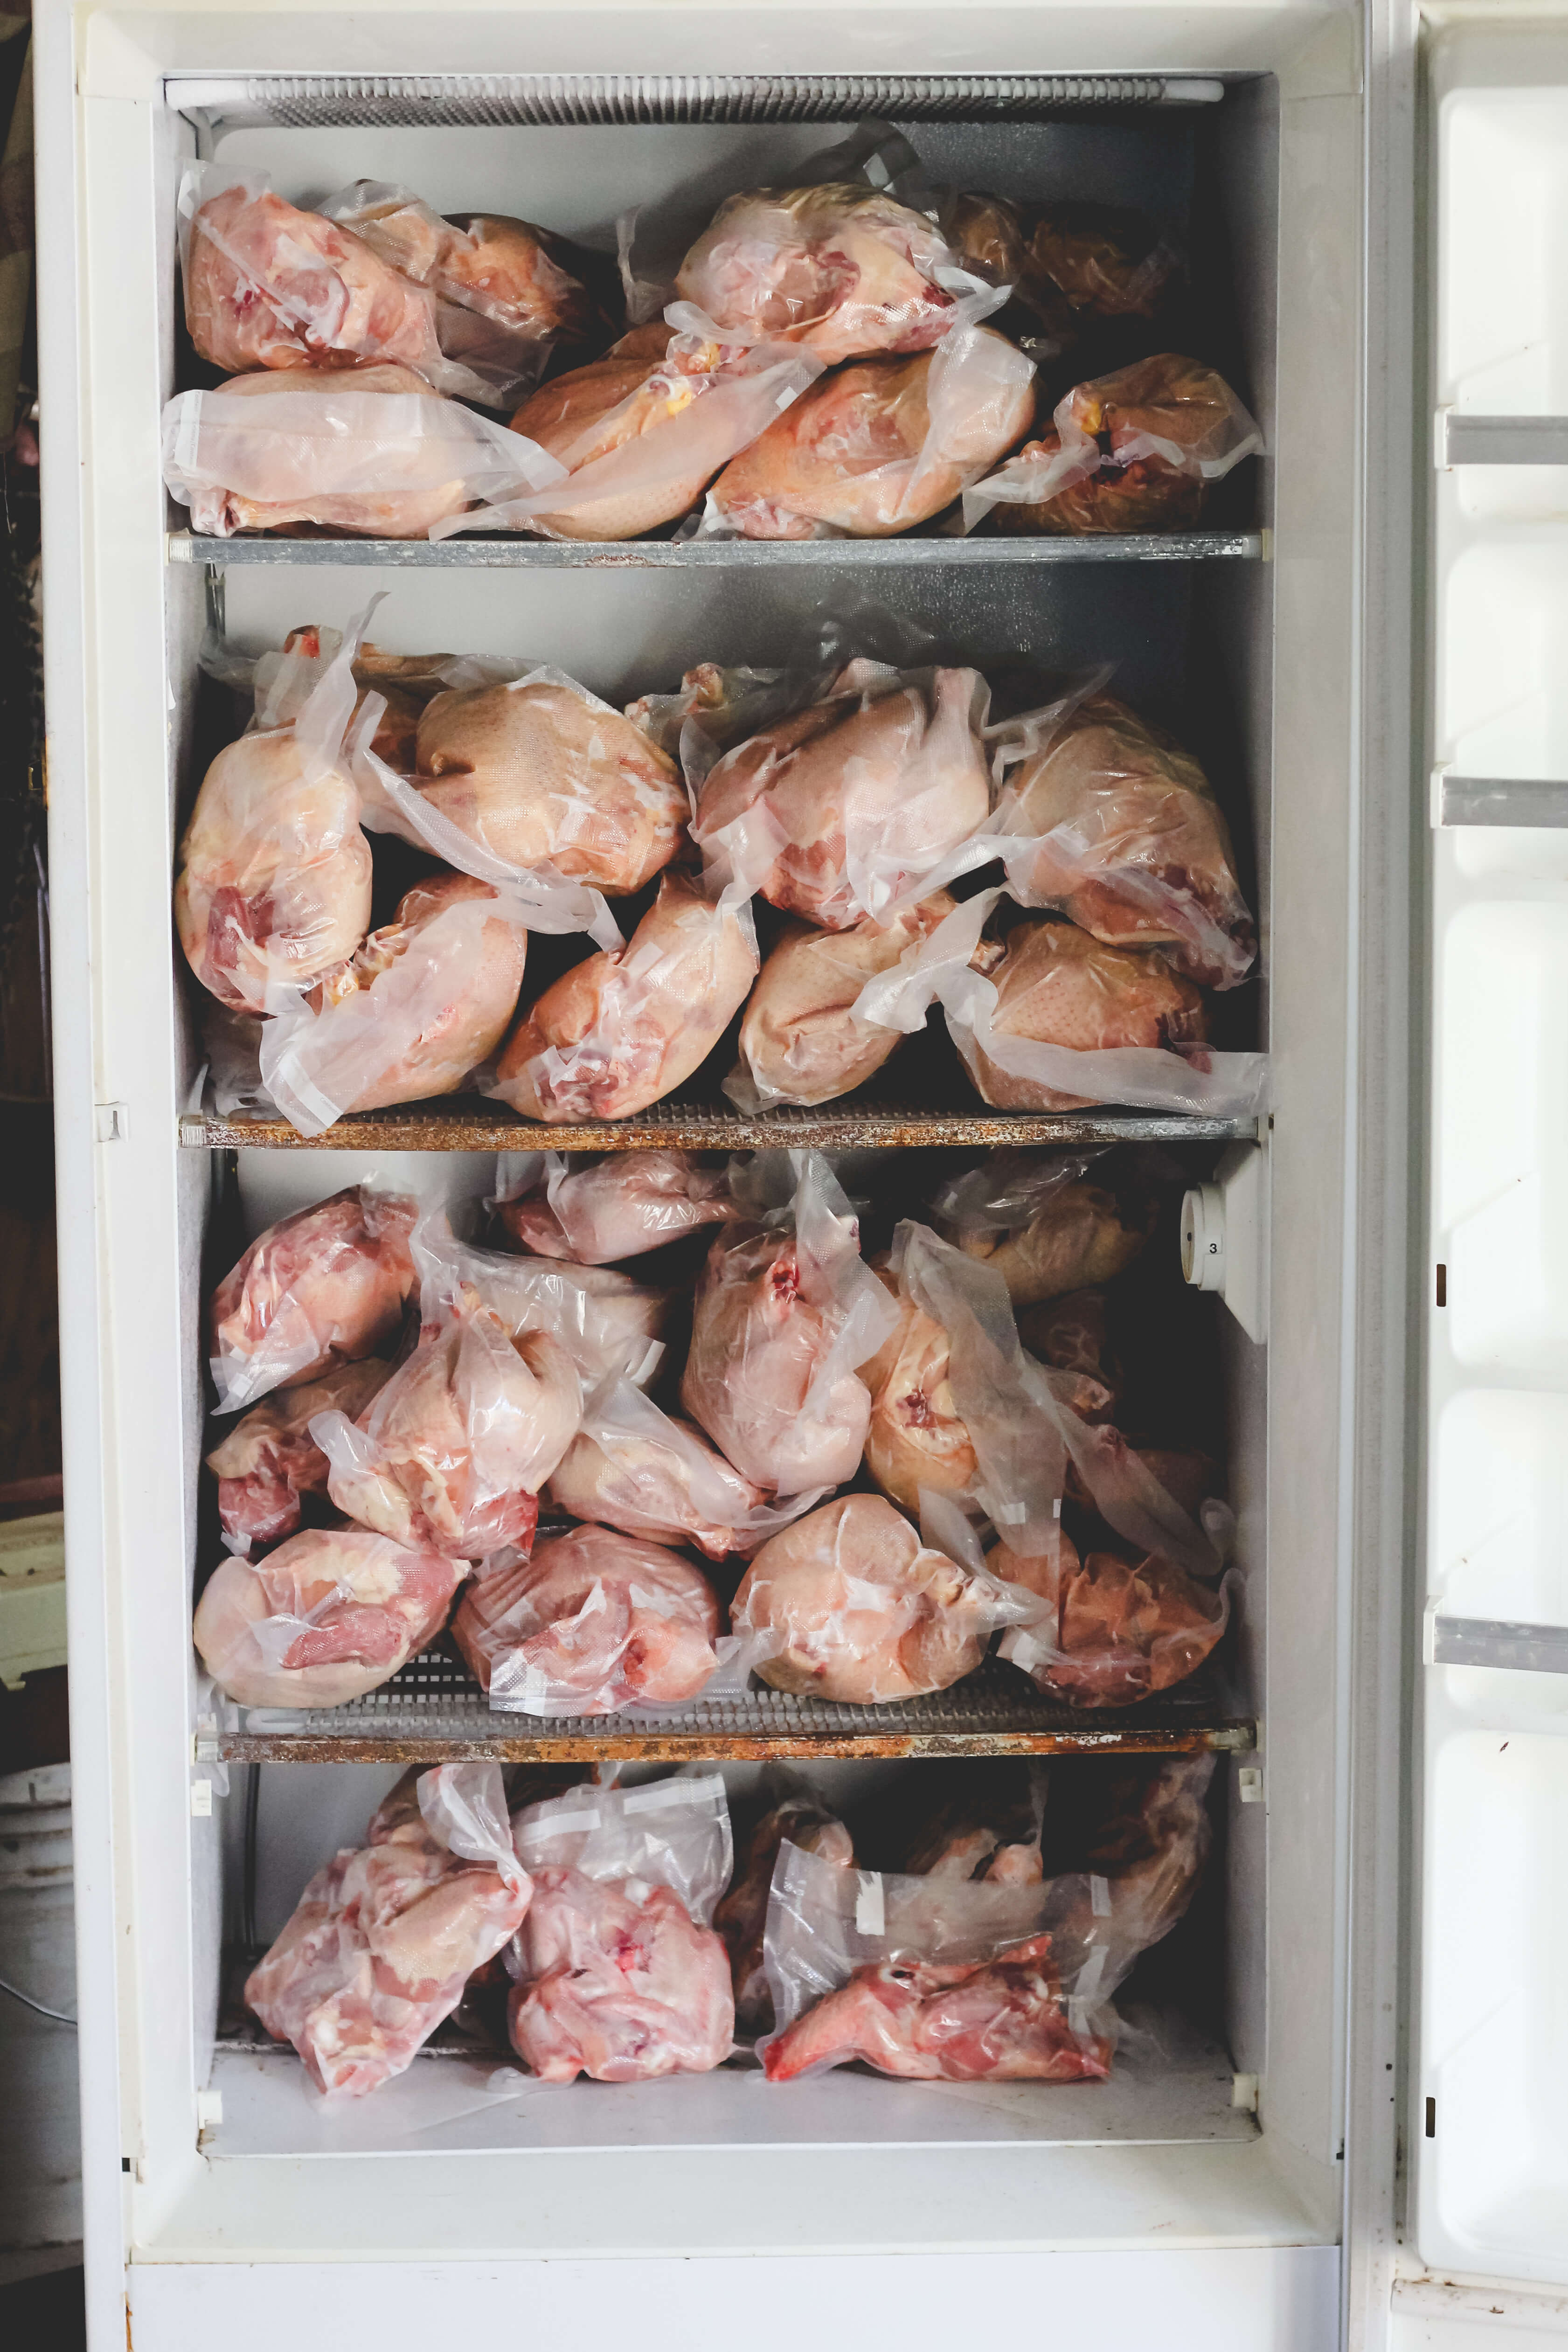 Freezer full of vacuum packed homegrown chicken